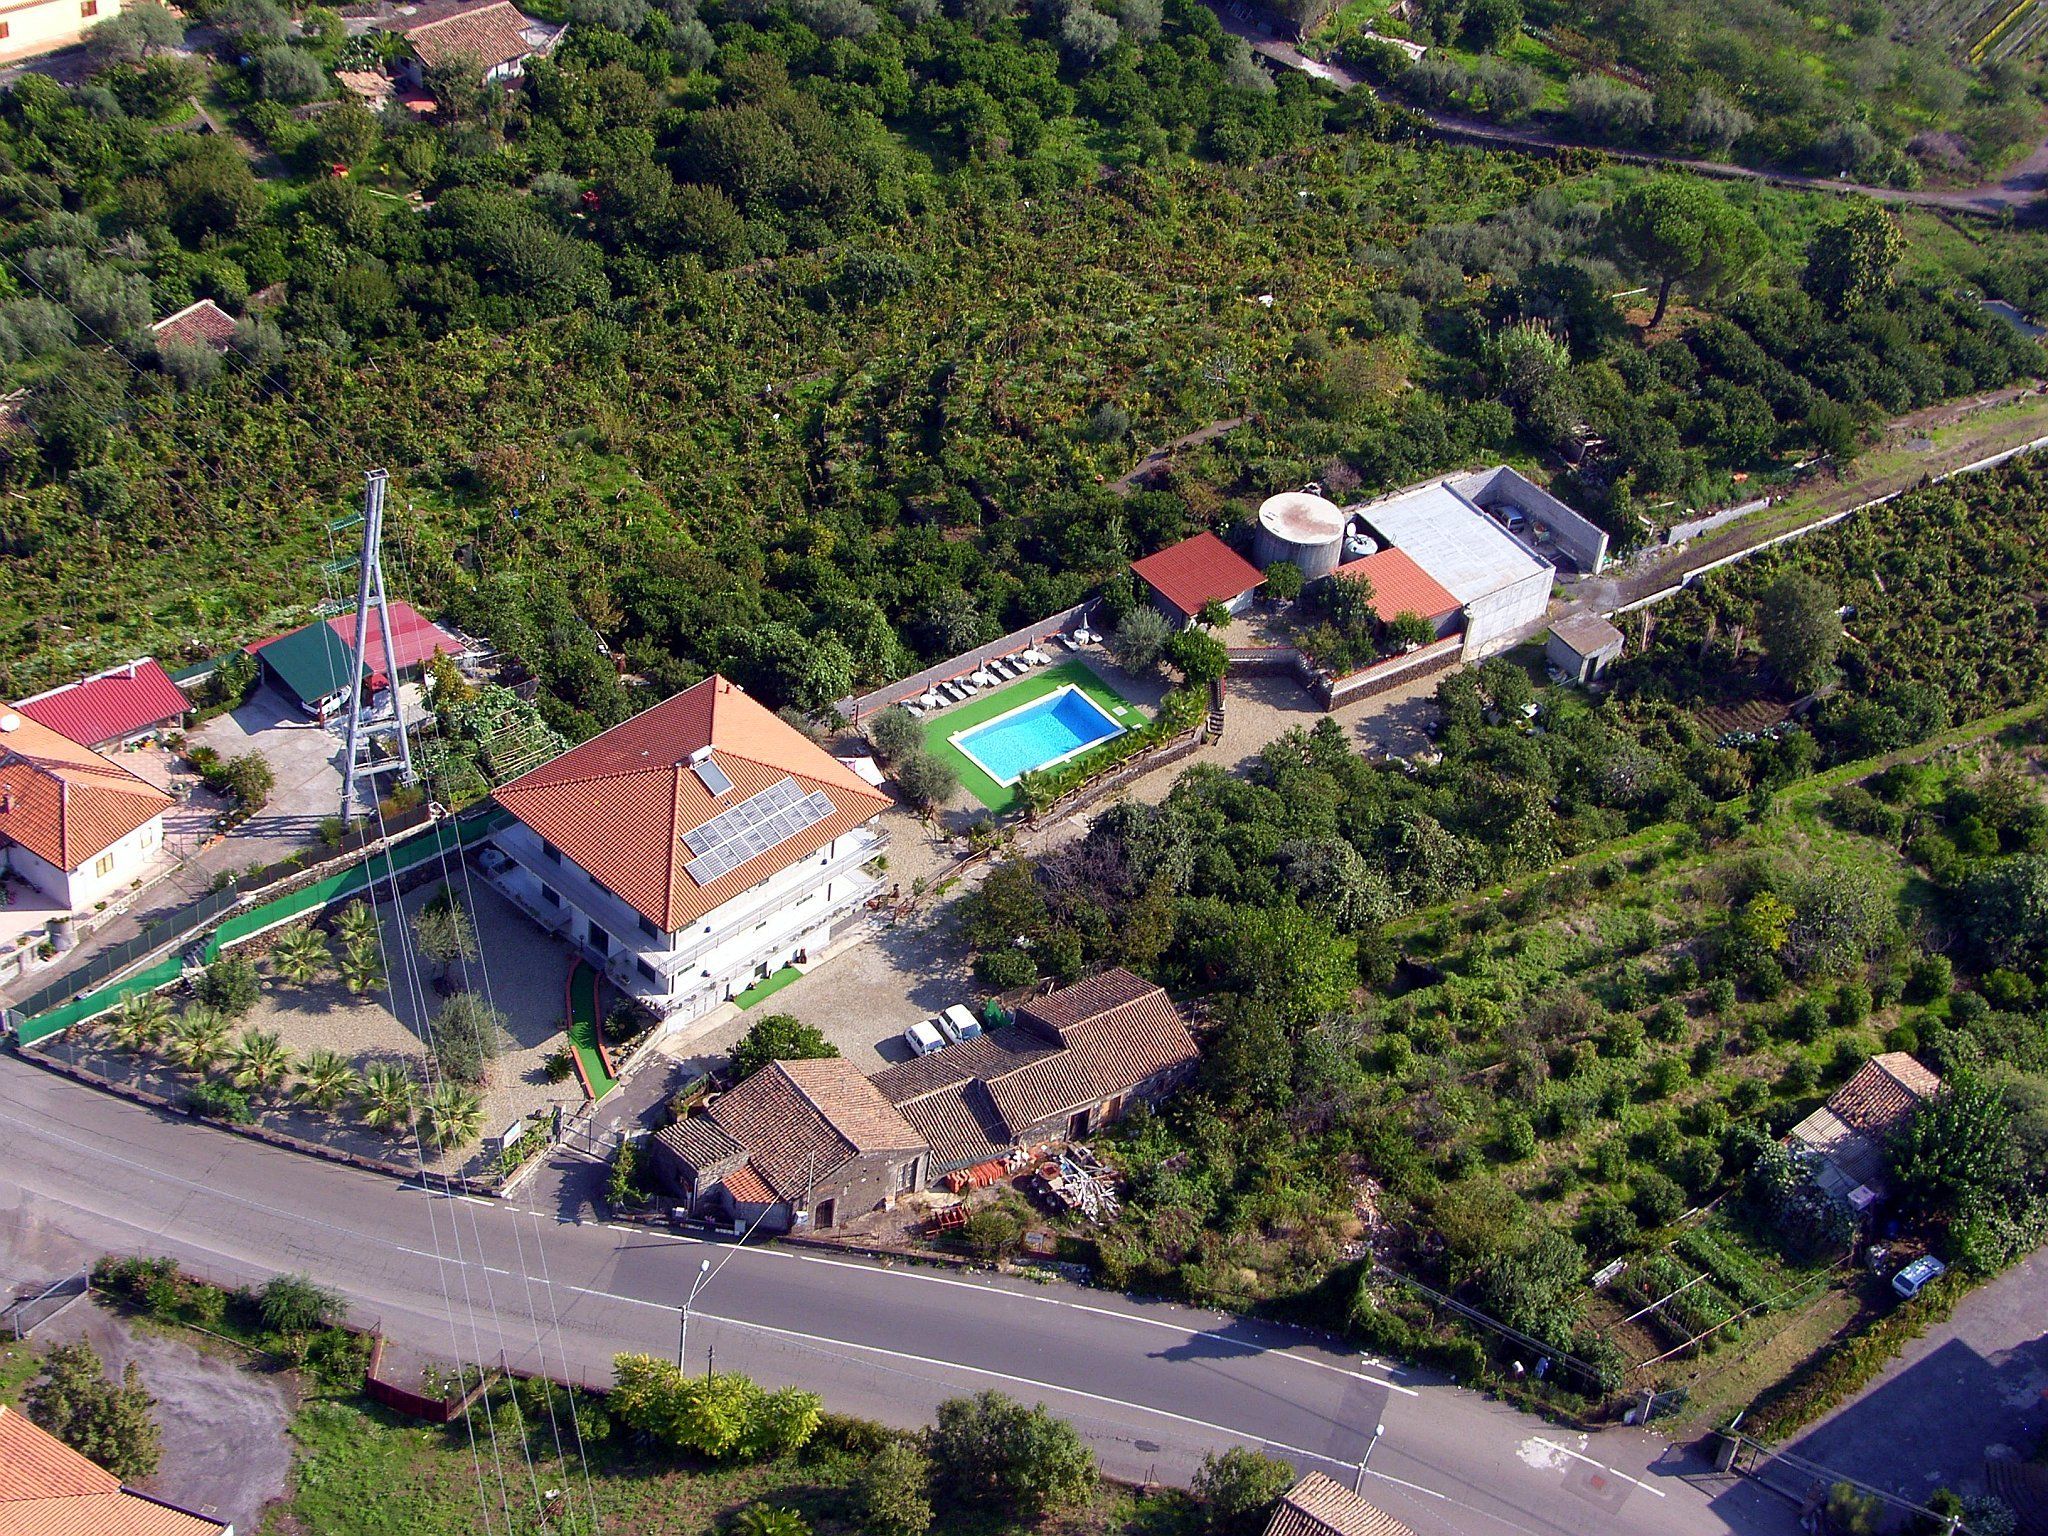   Villa Don Salvatore